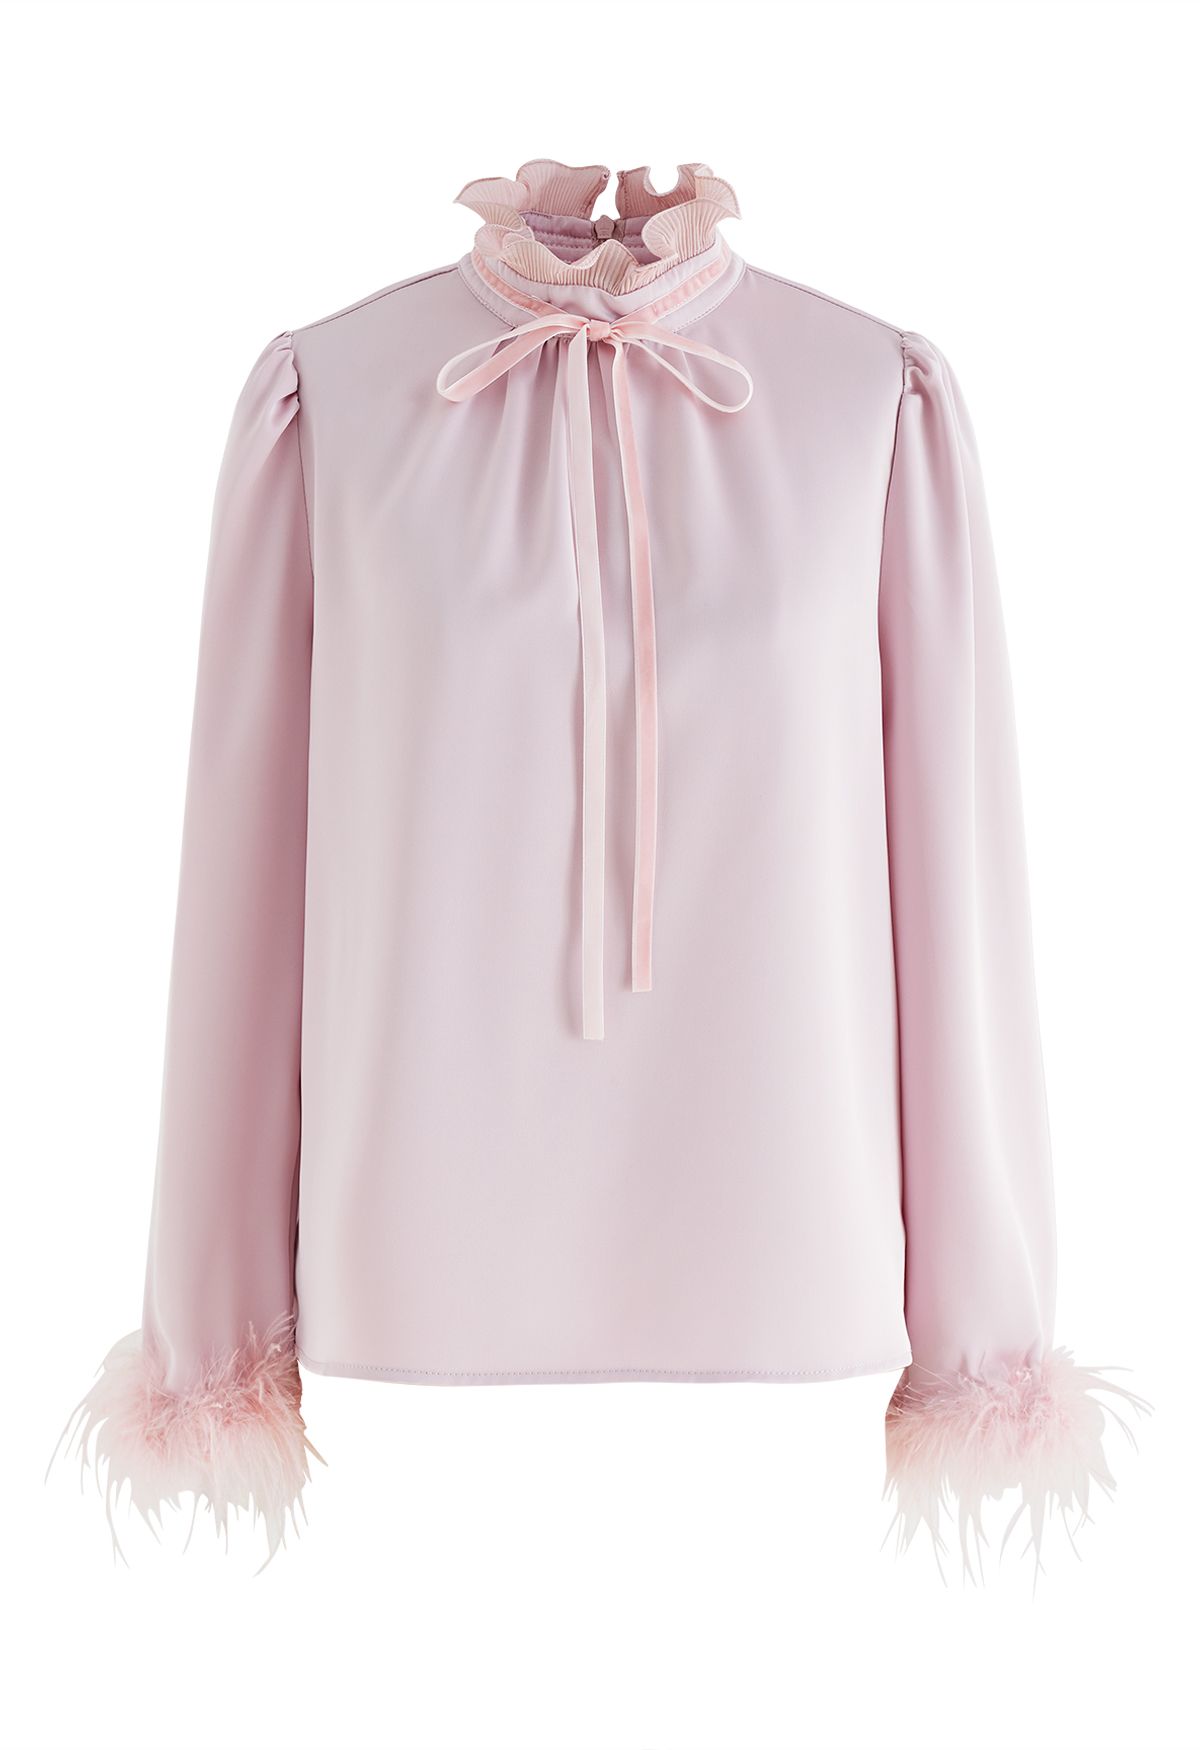 Ruffled Neckline Feathered Cuffs Satin Shirt in Pink